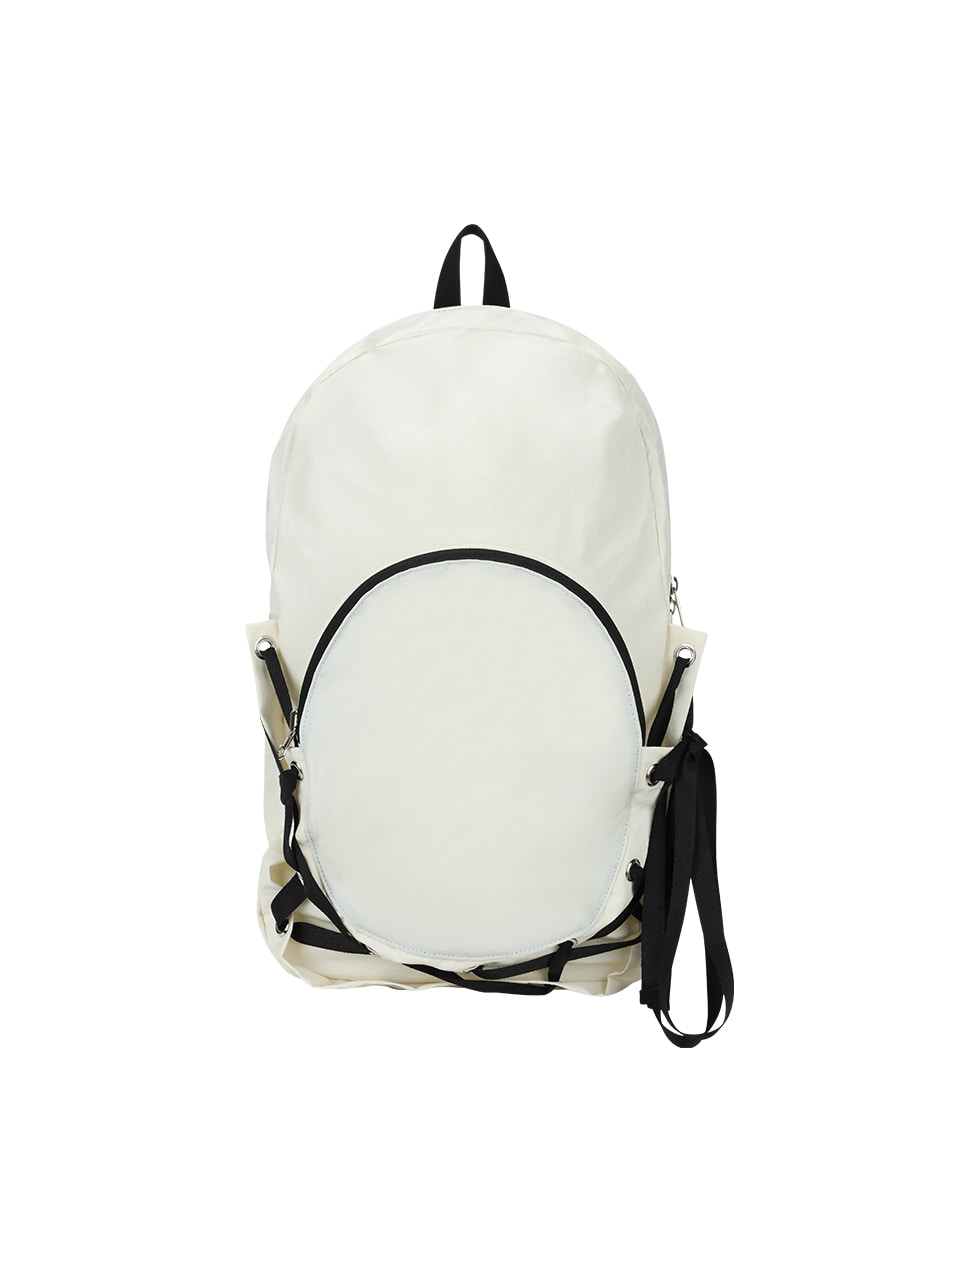 Nest Backpack - Moon Ivory